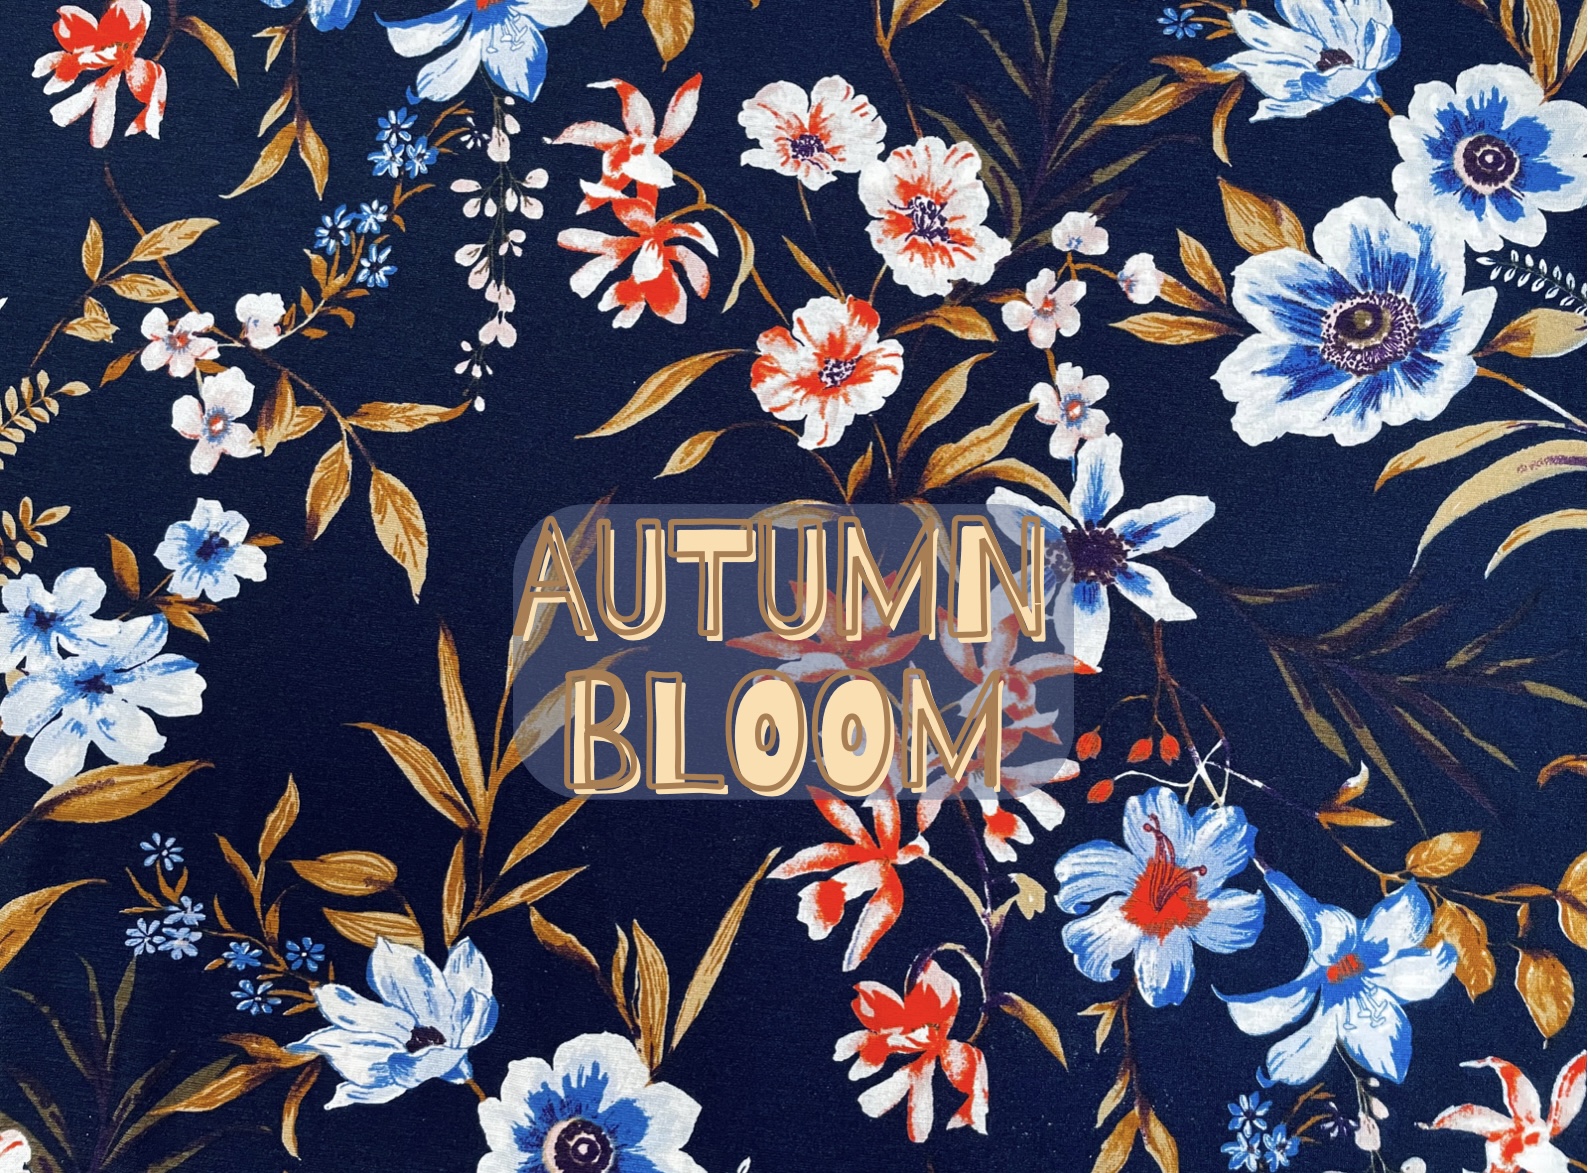 Jilly’s fashion autumn bloom